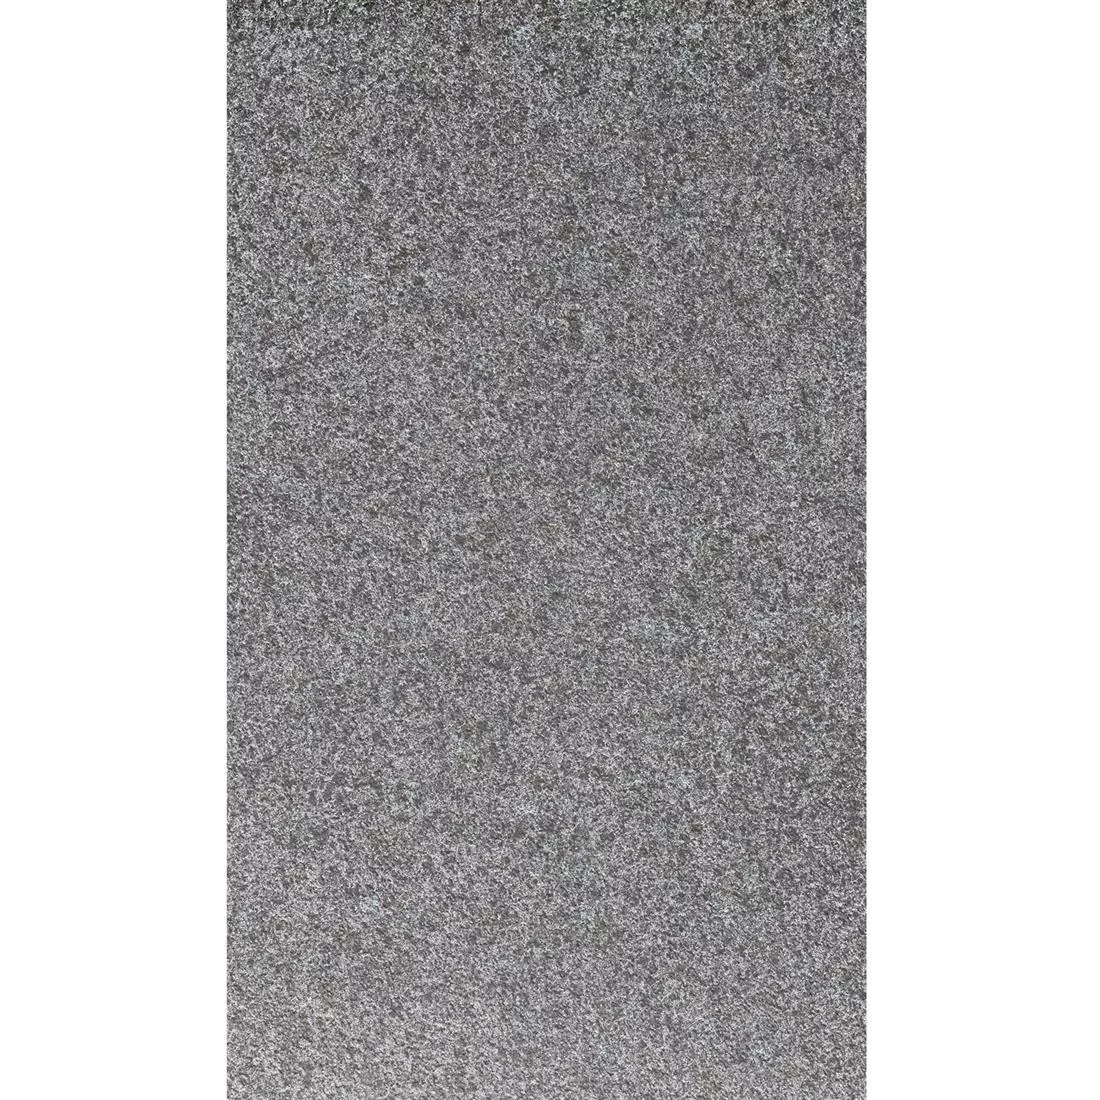 Sample Terrastegels Stoneway Natuursteen Optiek Zwart 60x90cm